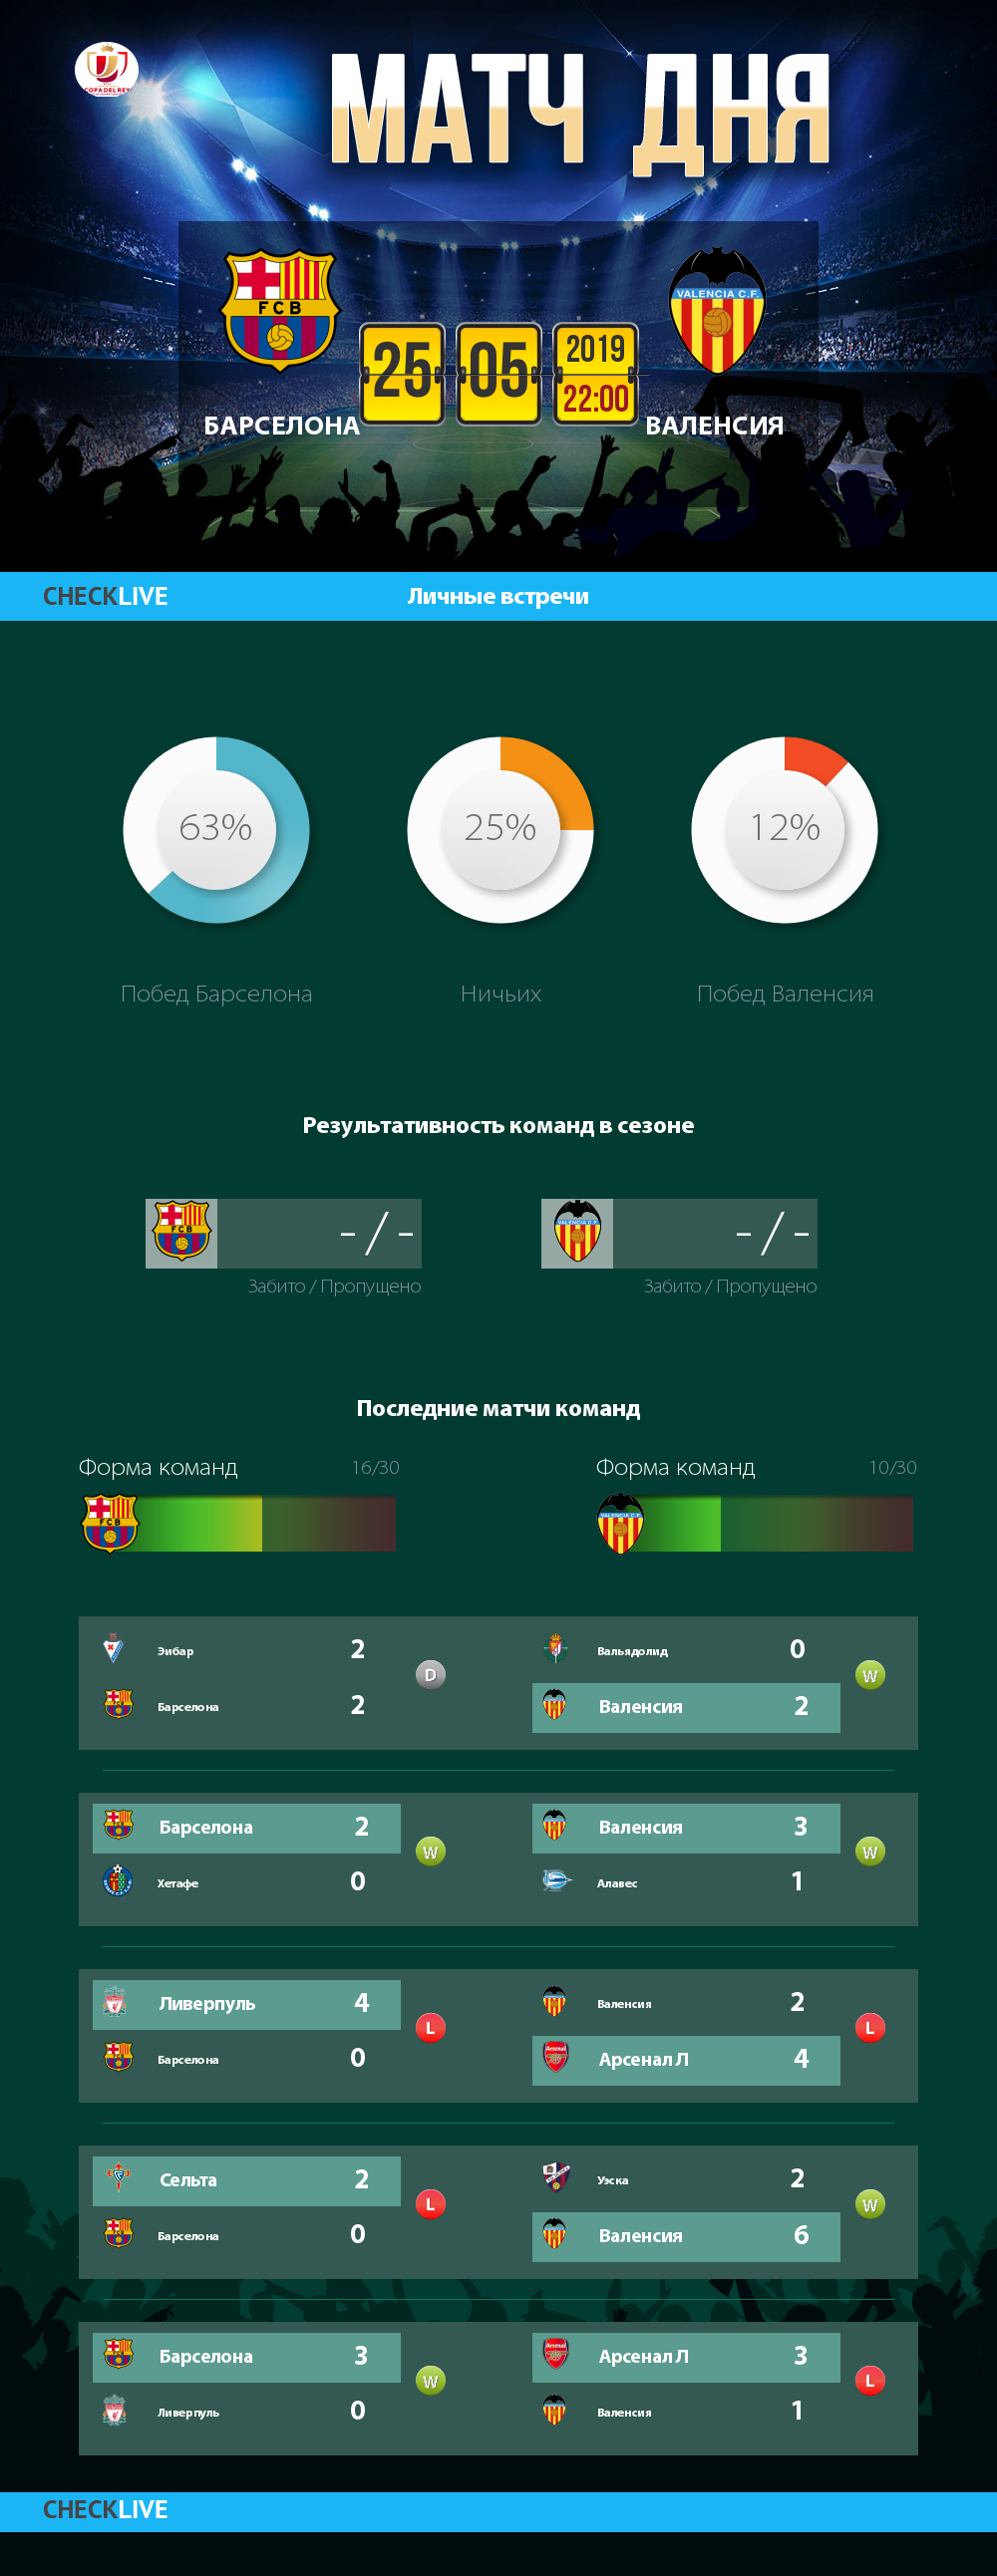 Инфографика Барселона и Валенсия матч дня 25.05.2019